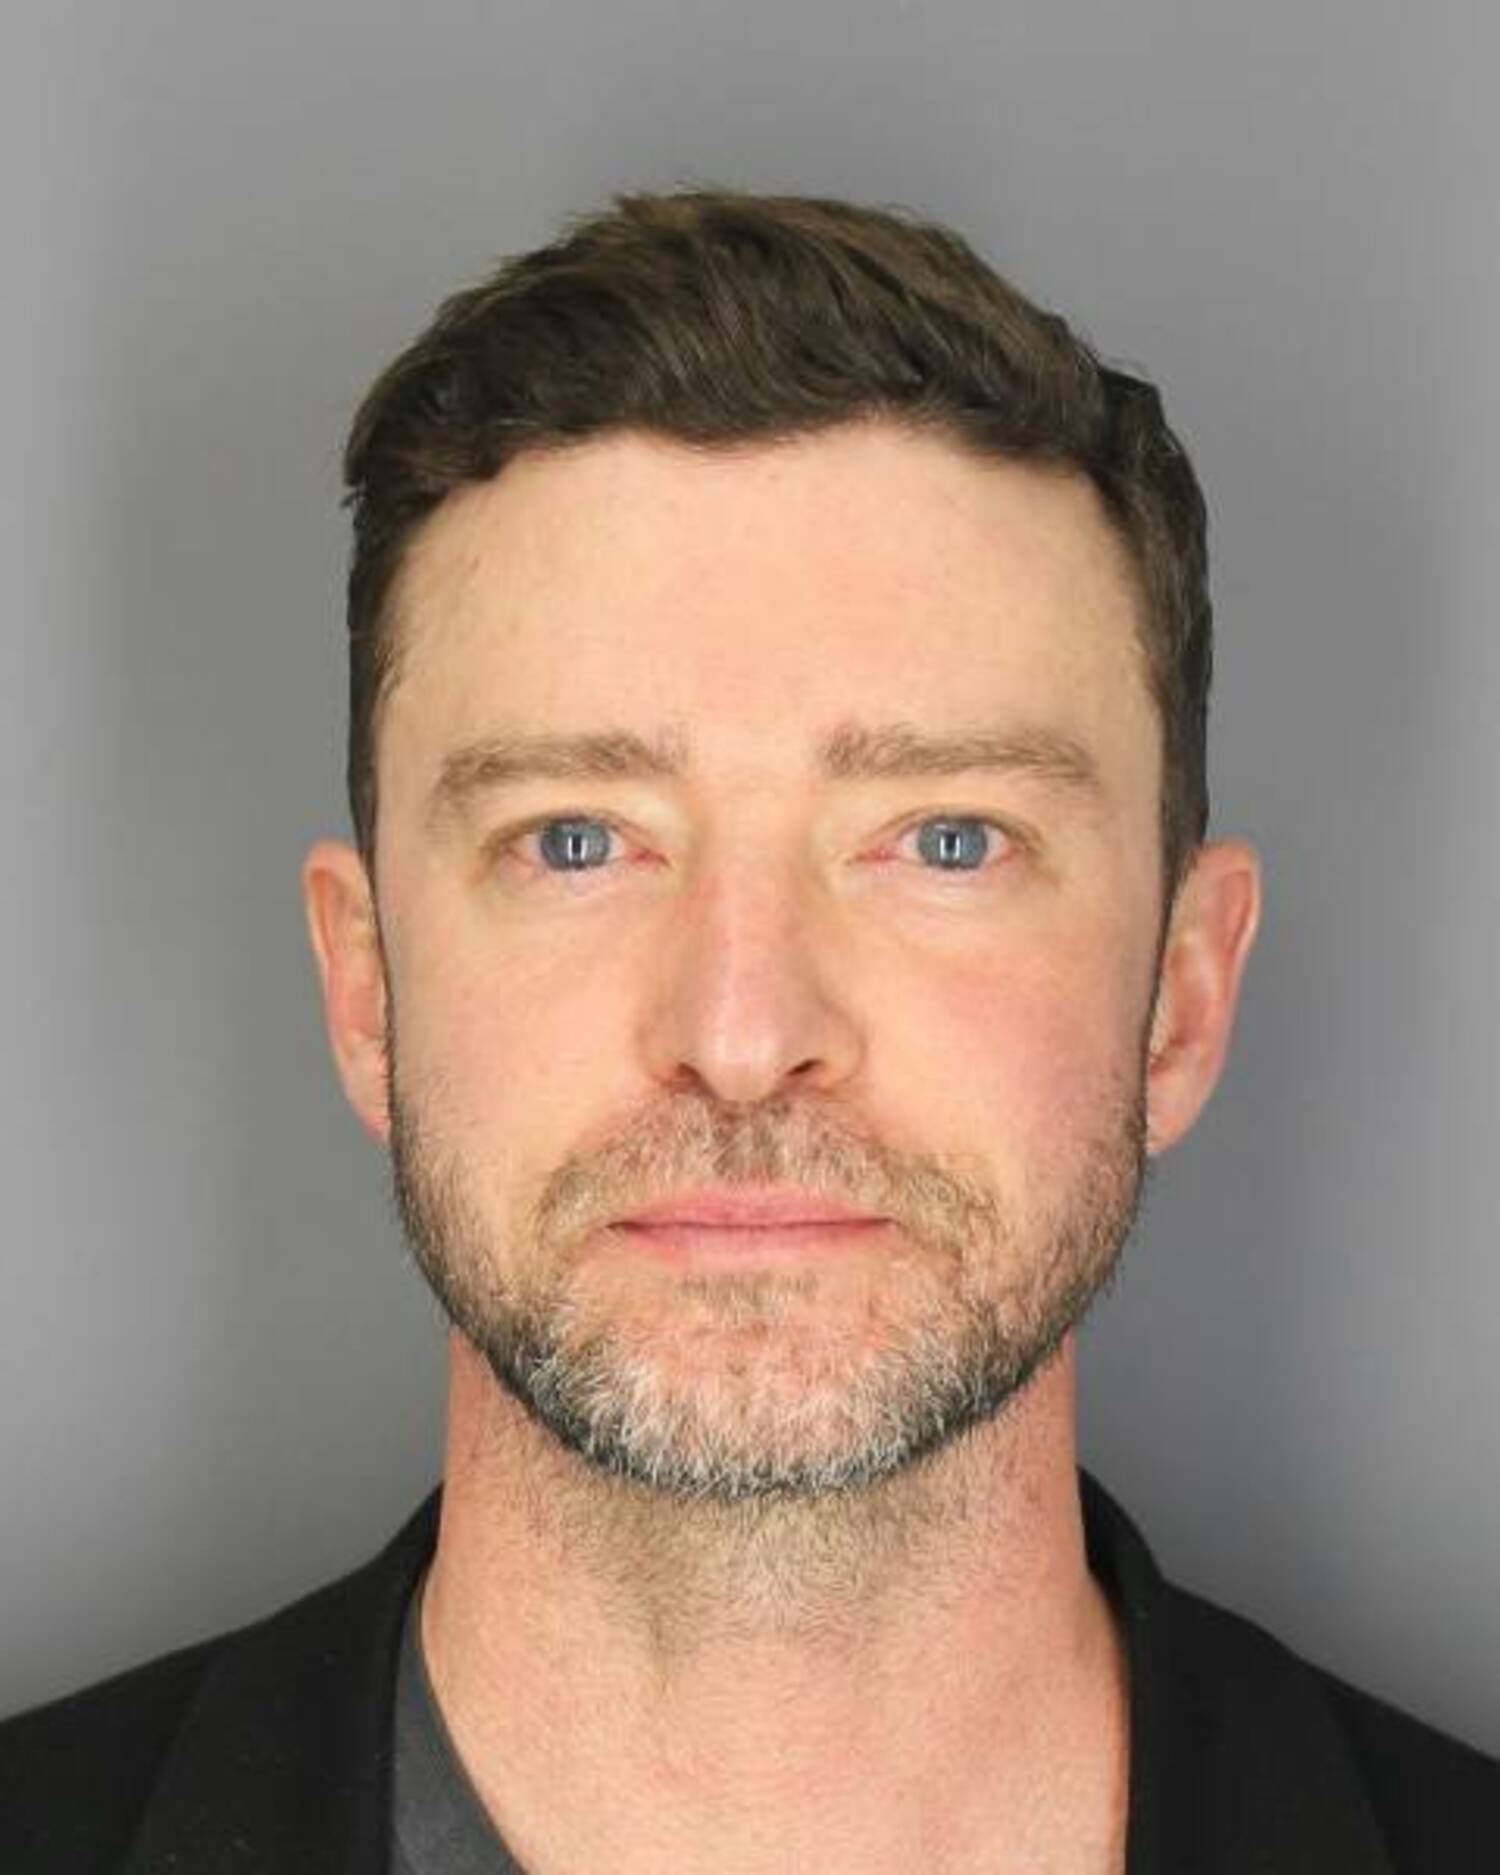 Justin Timberlake's mugshot, released by the Sag Harbor Village Police Department